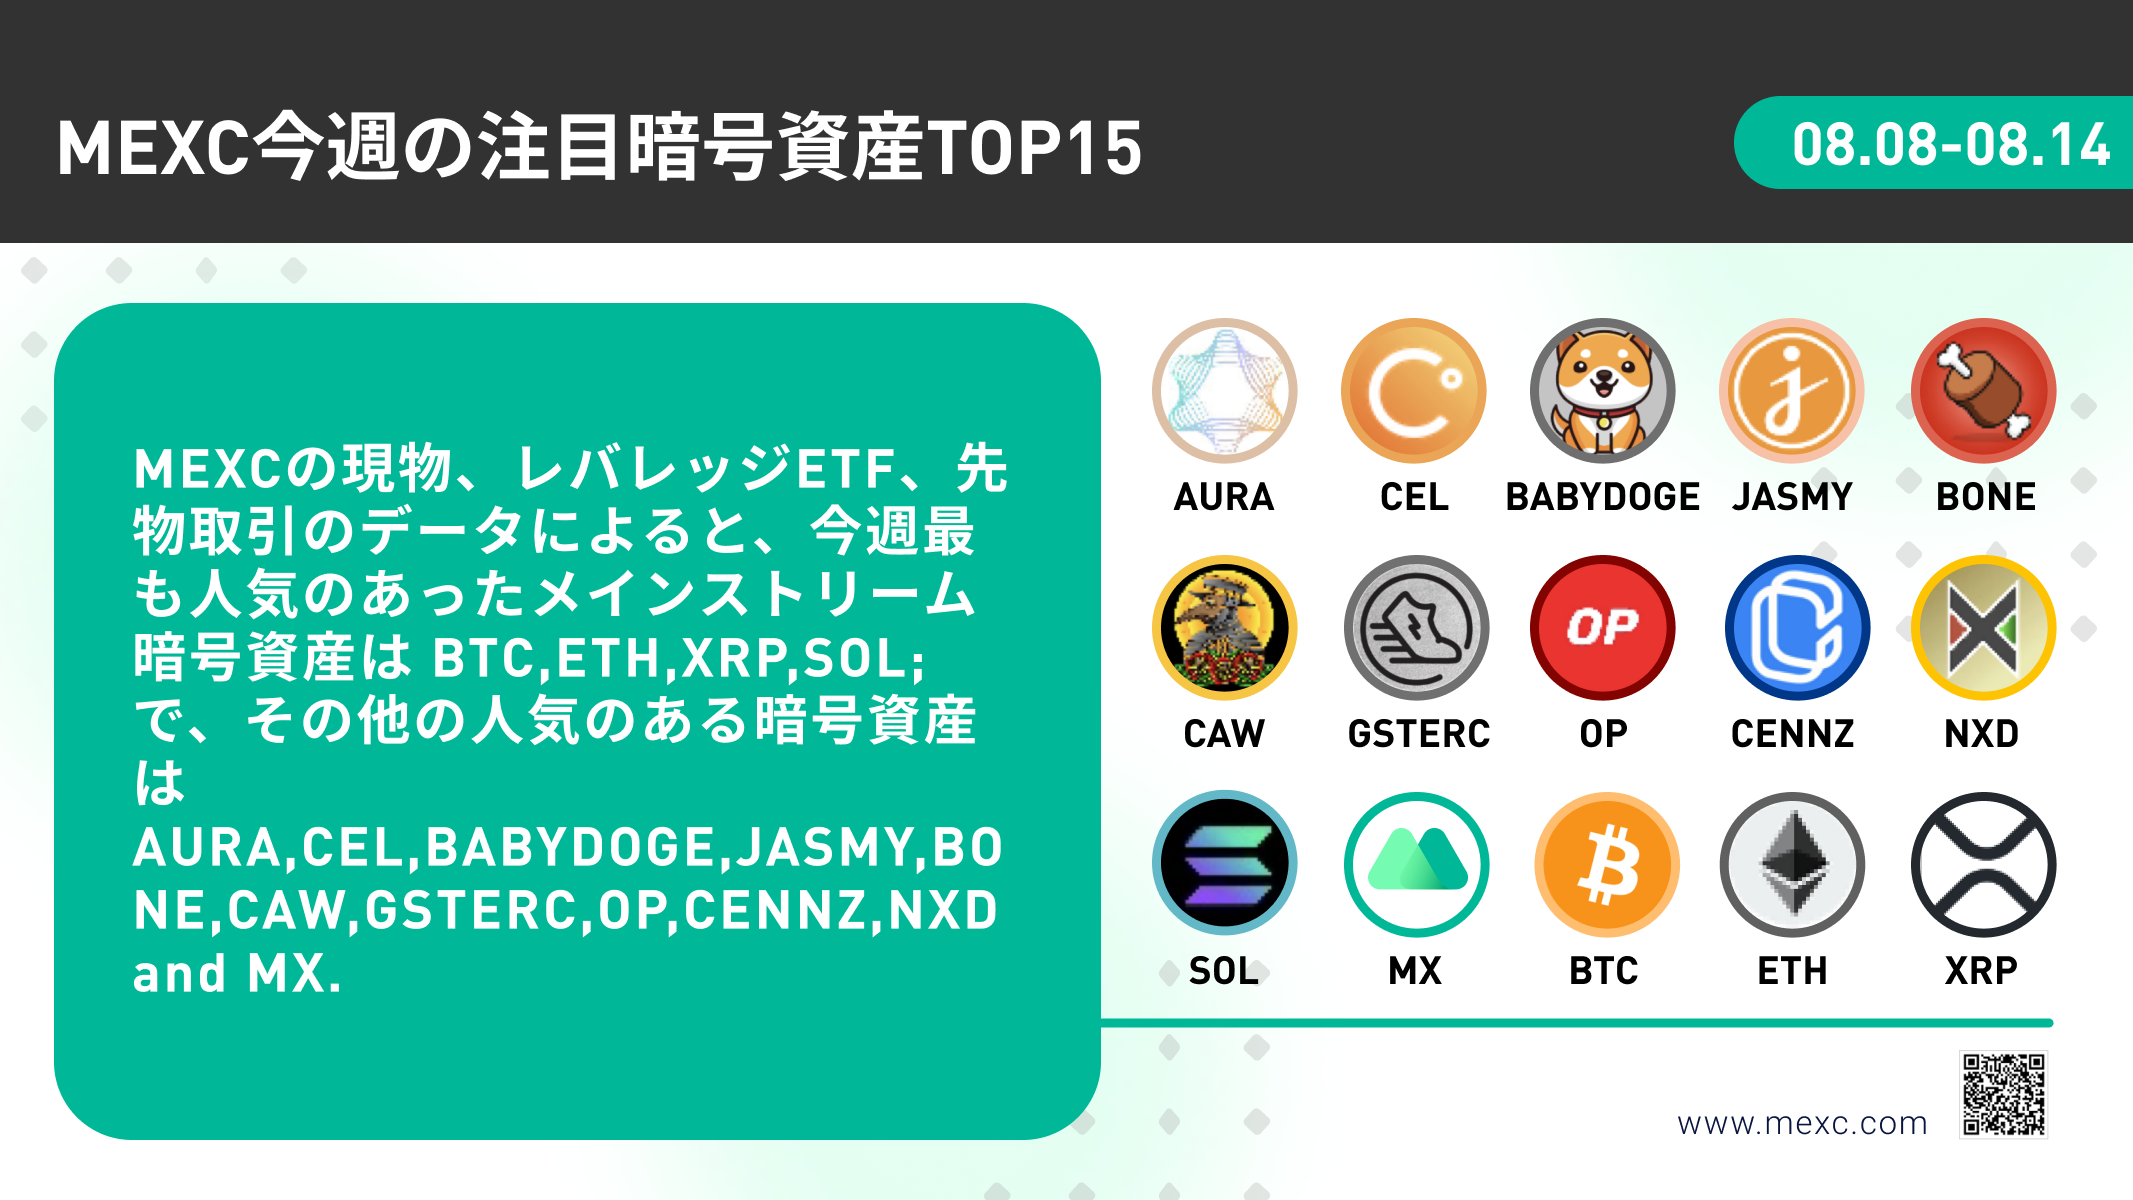 【8/8 – 8/14】過去7日間のMEXC注目銘柄TOP10